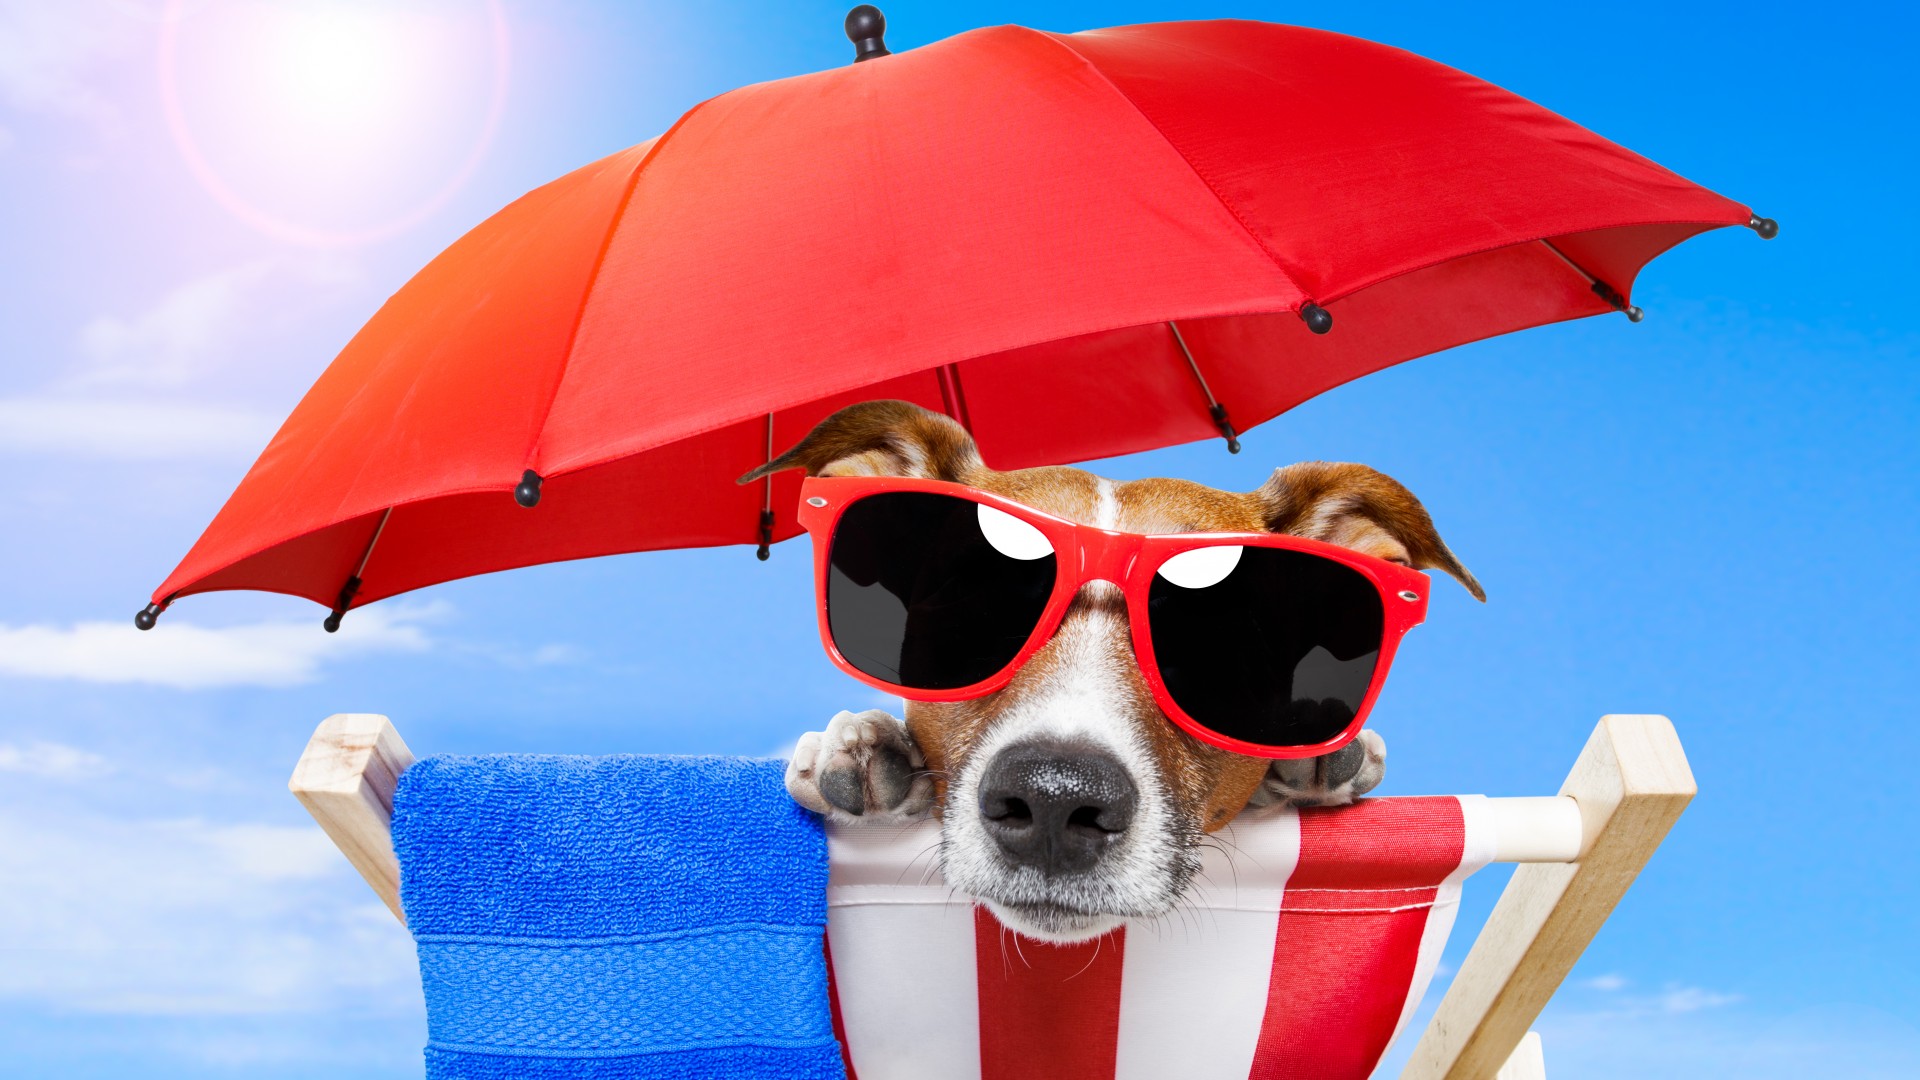 Dog, puppy, sun, summer, beach, sunglasses, umbrella, vacation, animal, pet, sky (horizontal)